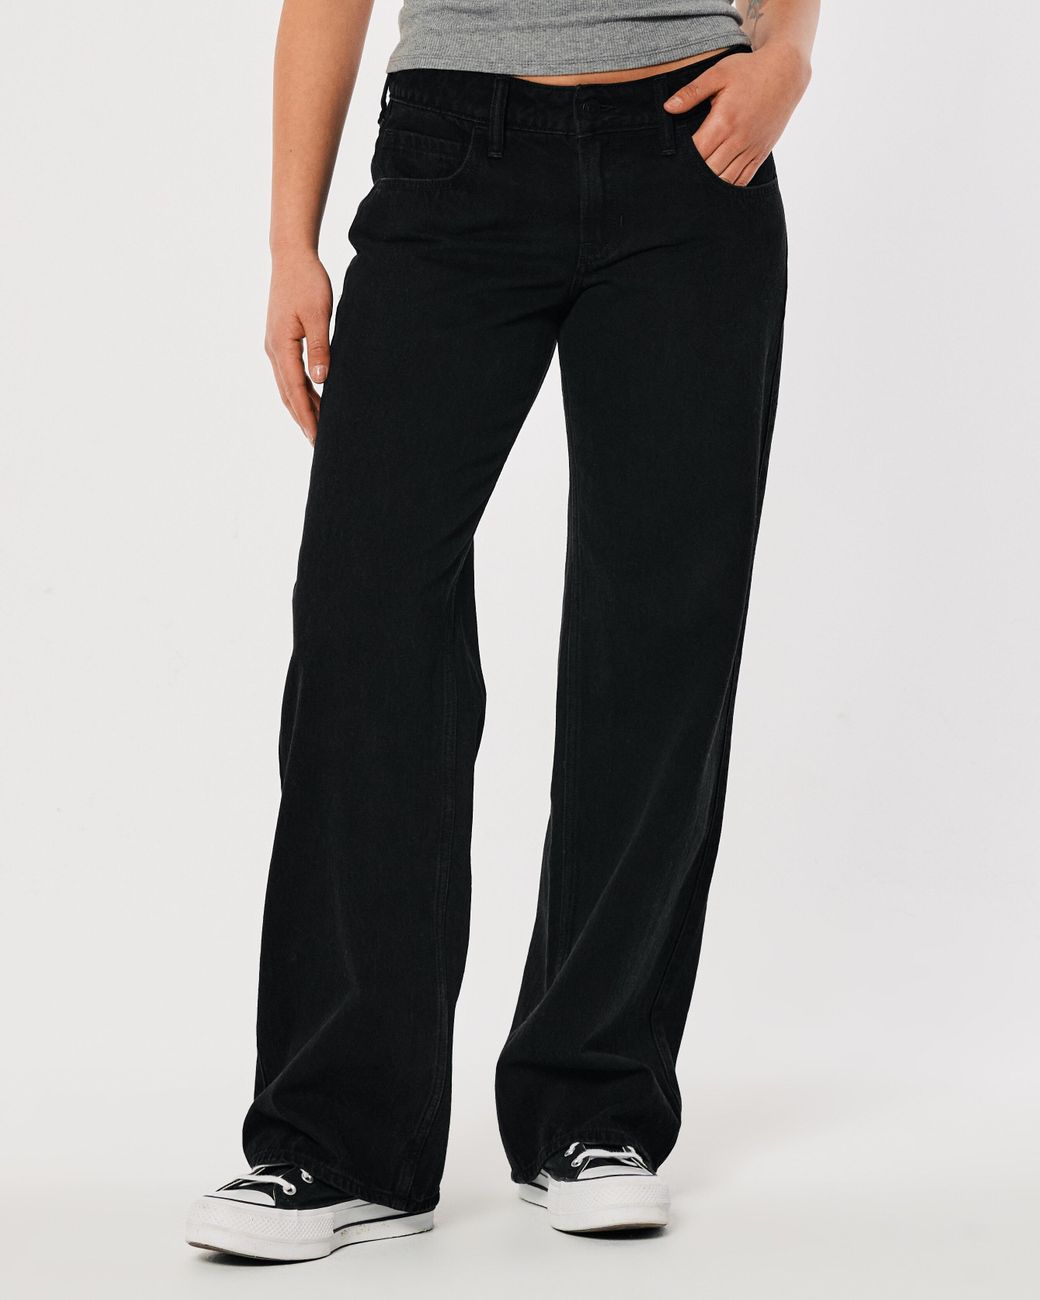 hollister low rise baggy jeans color dark wash size - Depop